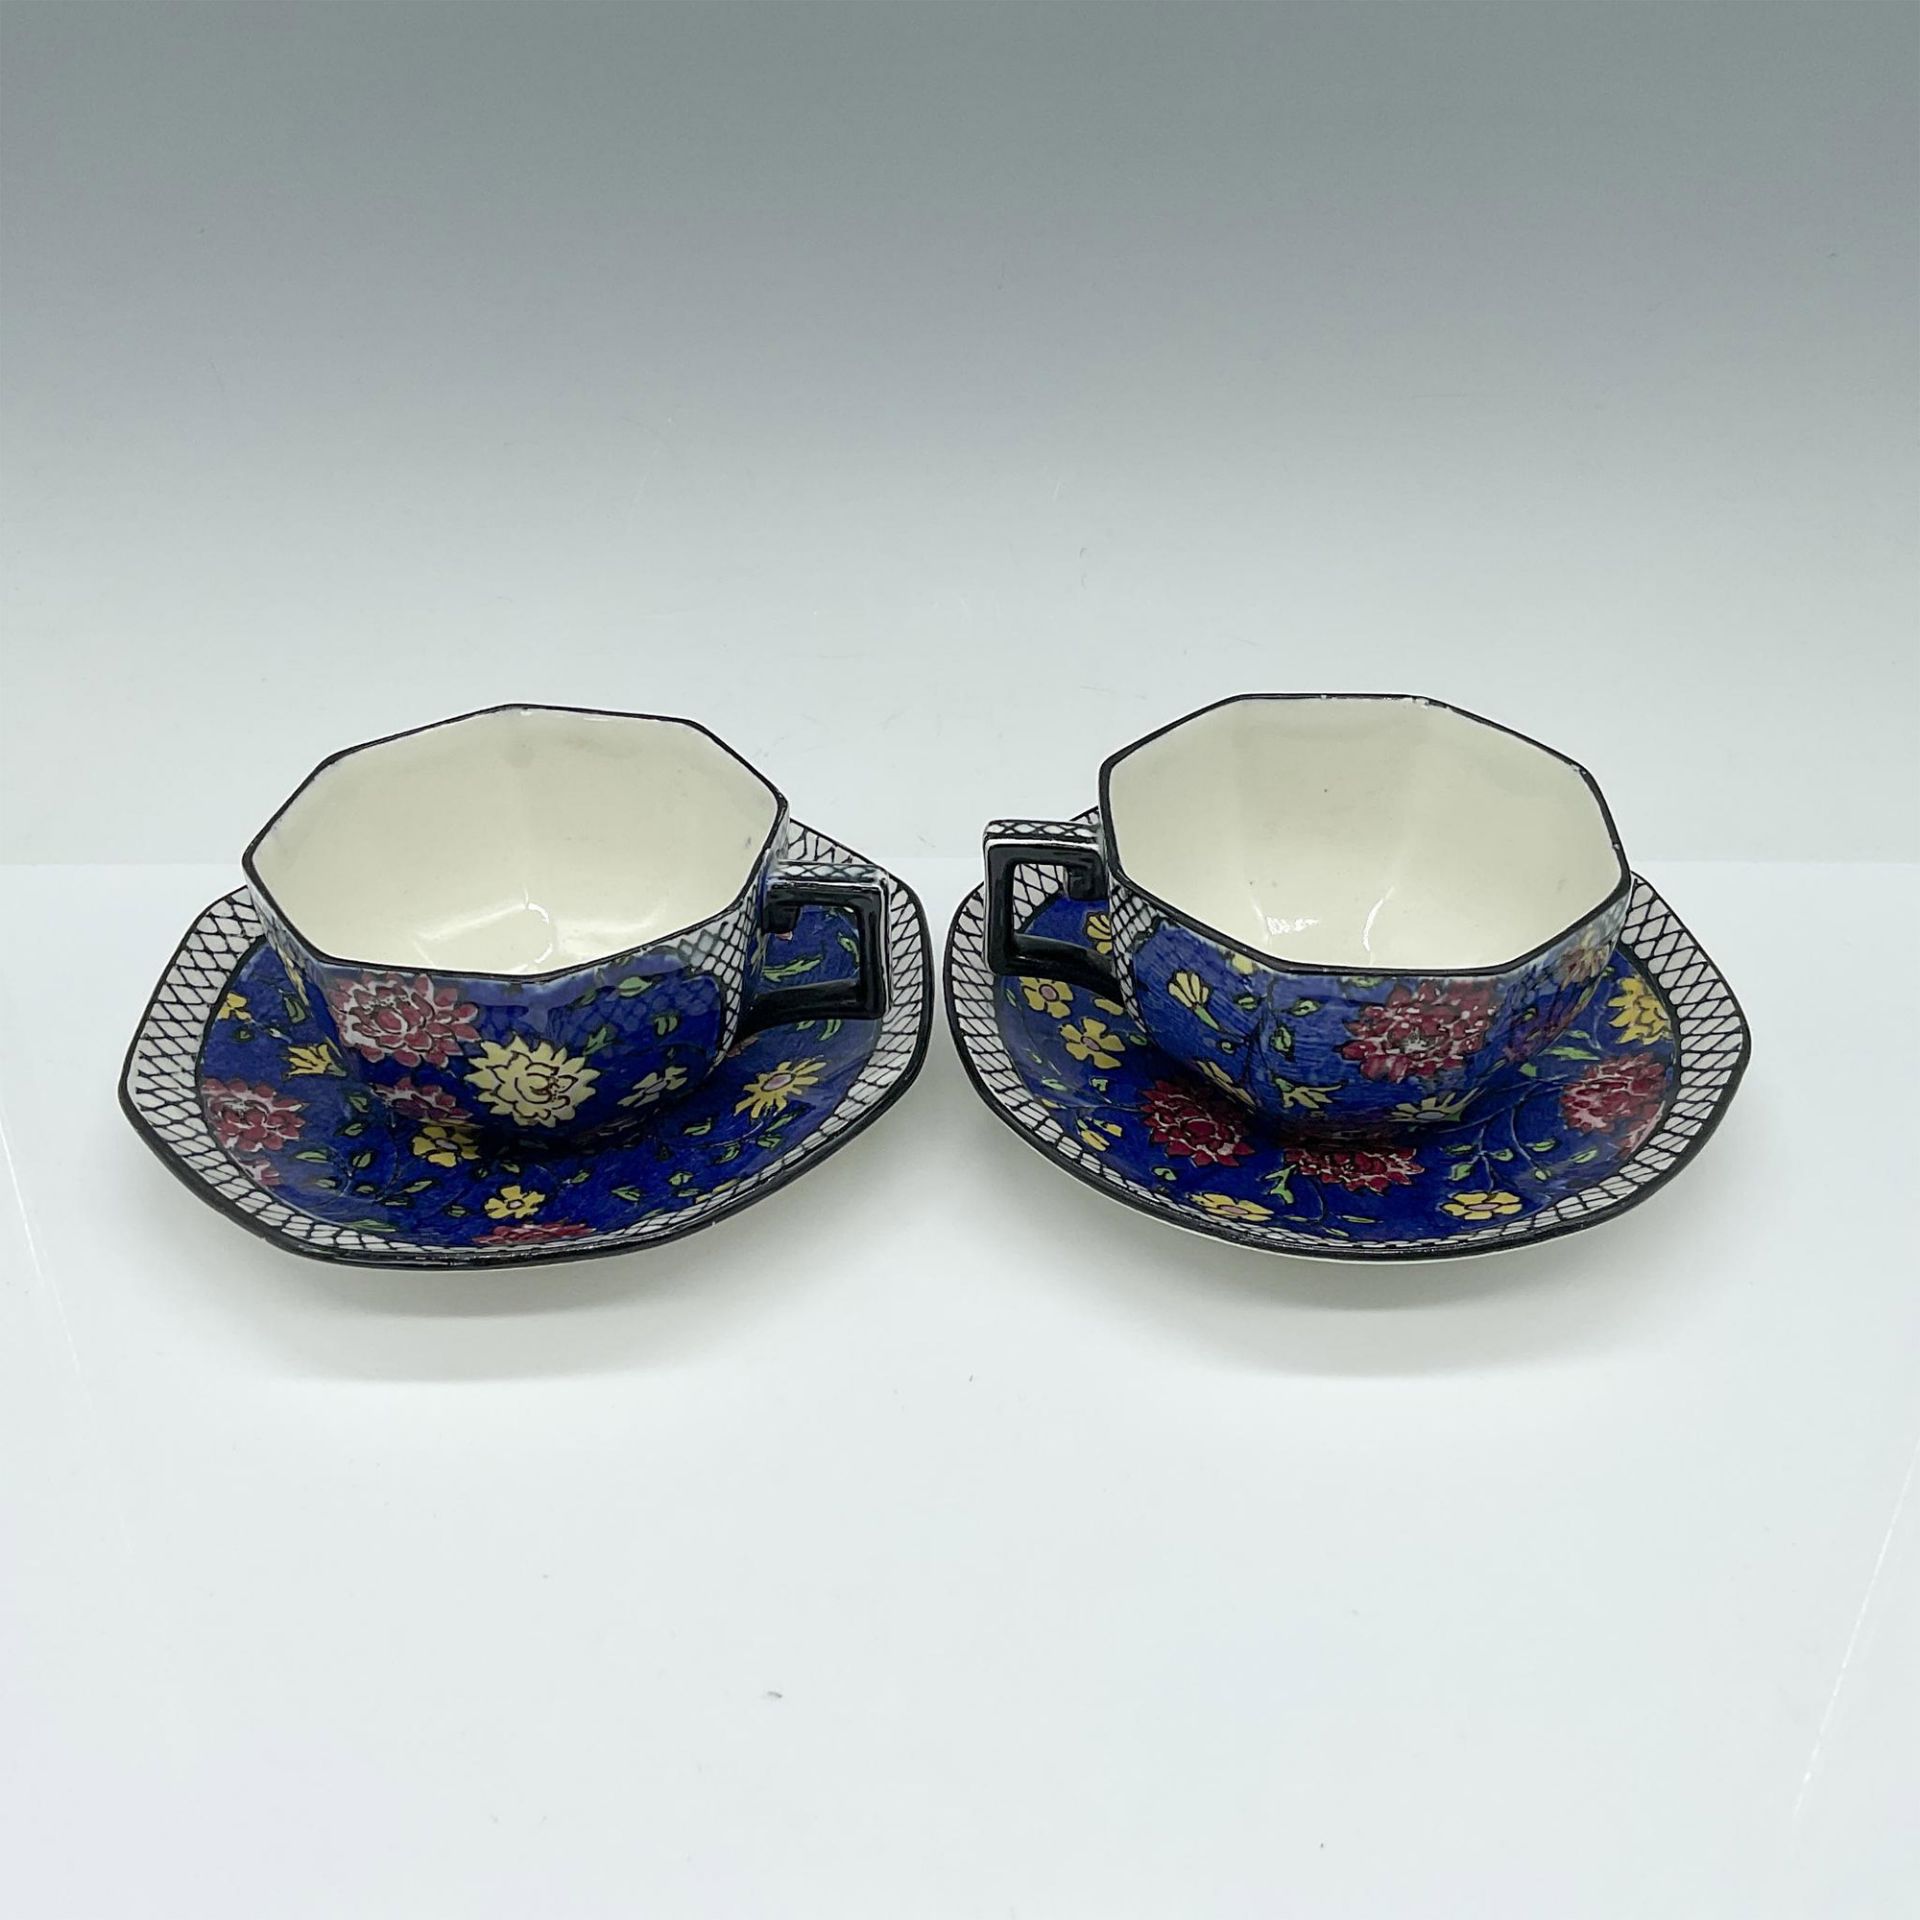 4pc Royal Doulton Teacup & Saucer Set, Persian Anemone - Image 2 of 3